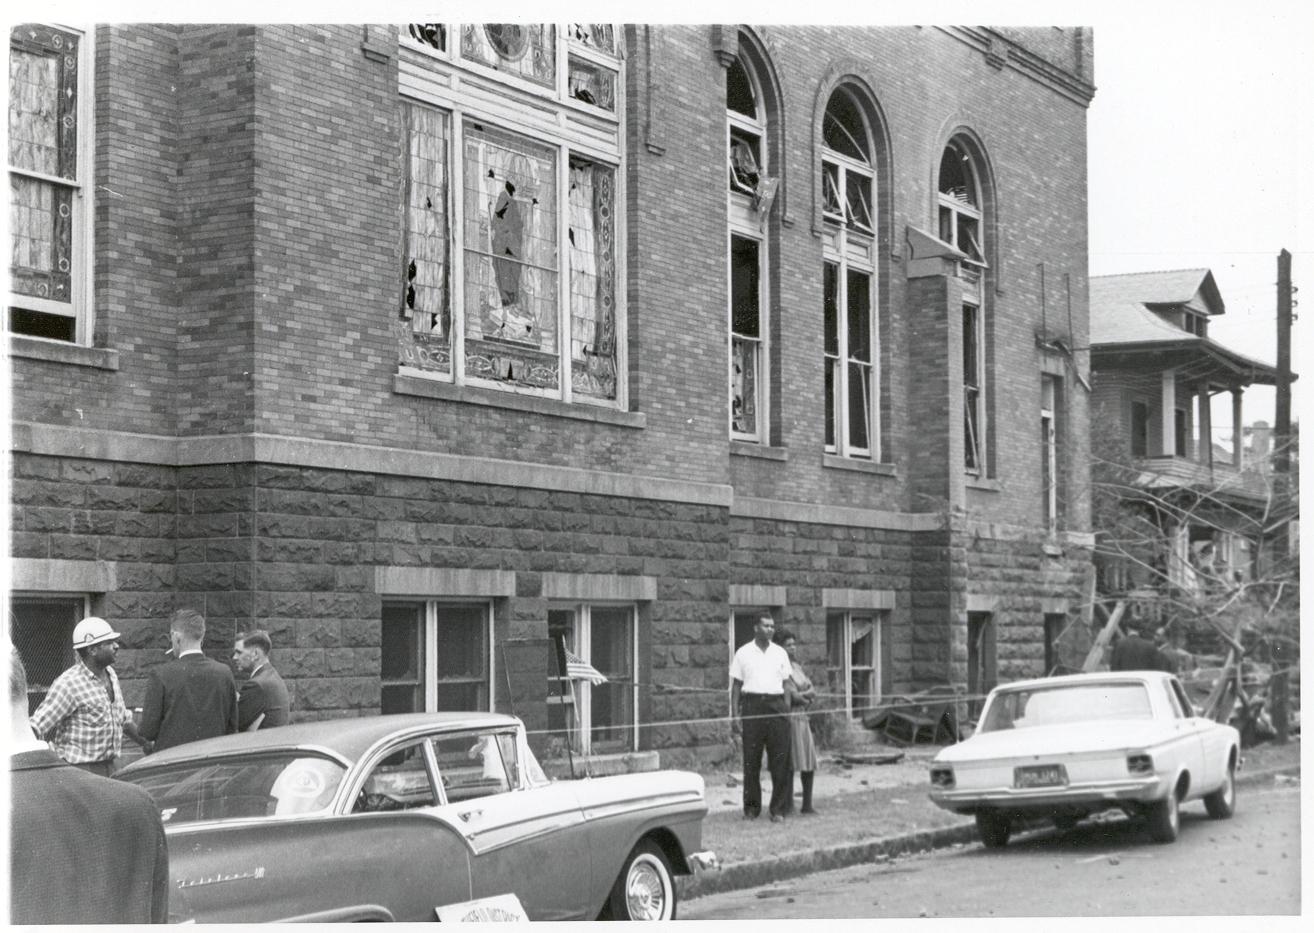 Baptist Church Bombing in 1963